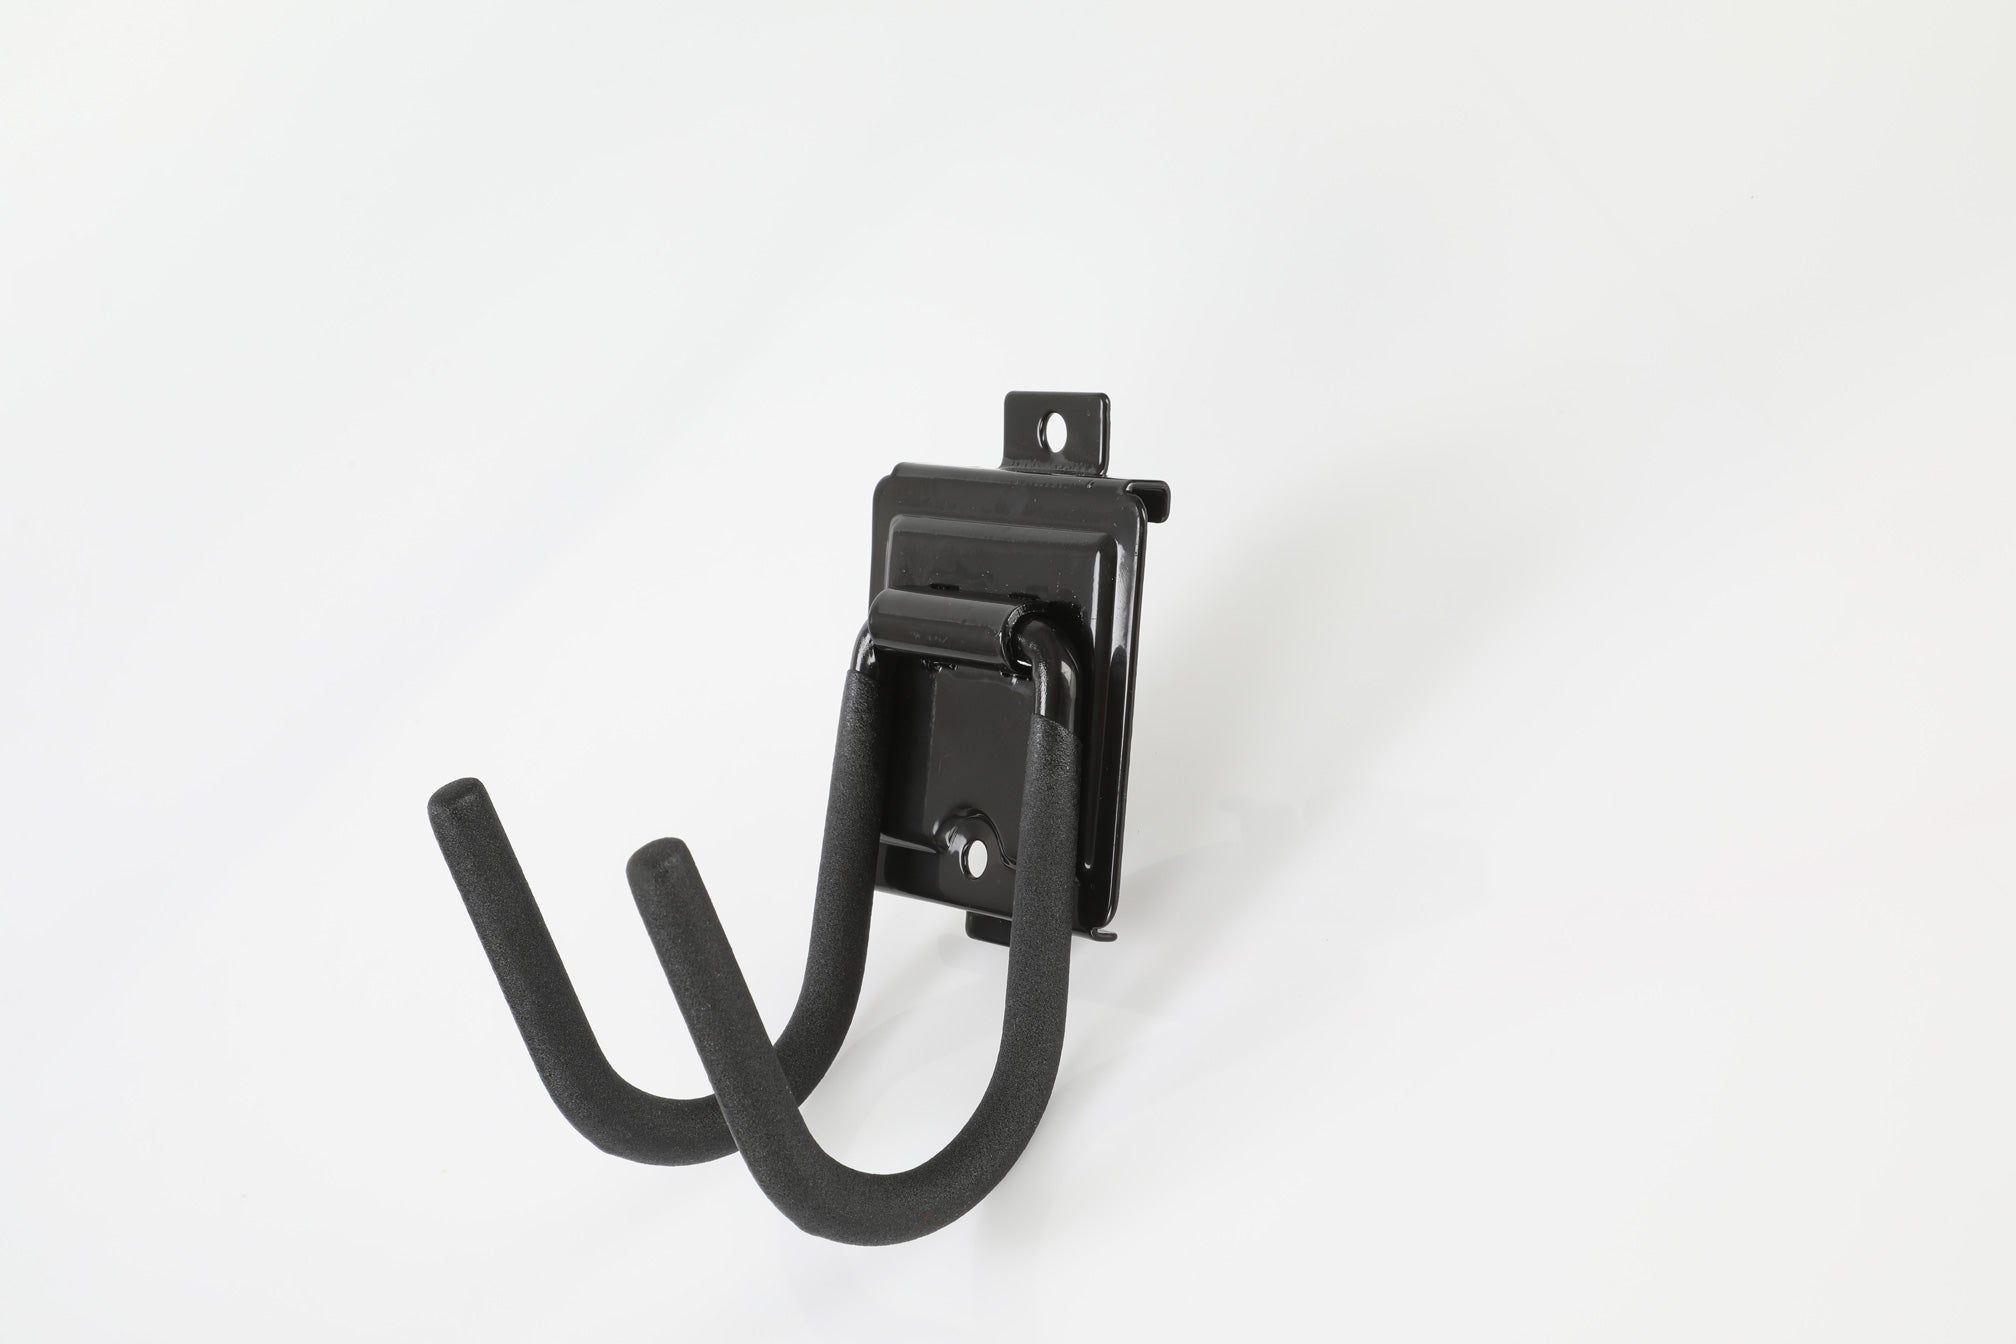 DS BS Adjustable Wall Mounted Tool Hanger Rack